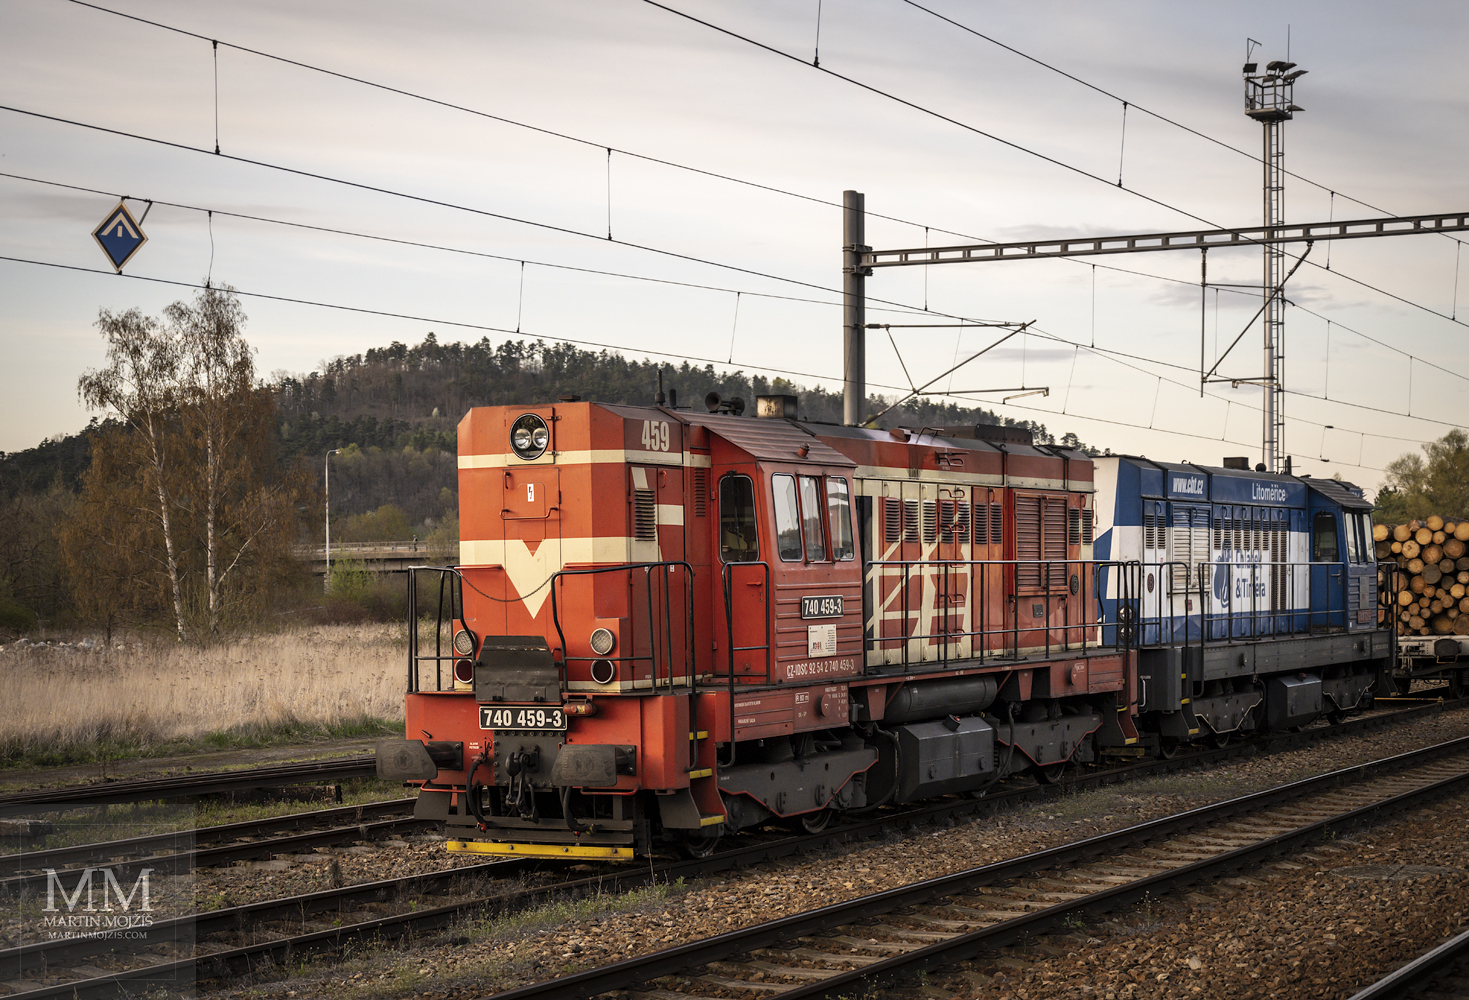 Dvojice diesel-elektrických posunovacích lokomotiv, v čele 740 459-3 IDS Cargo.